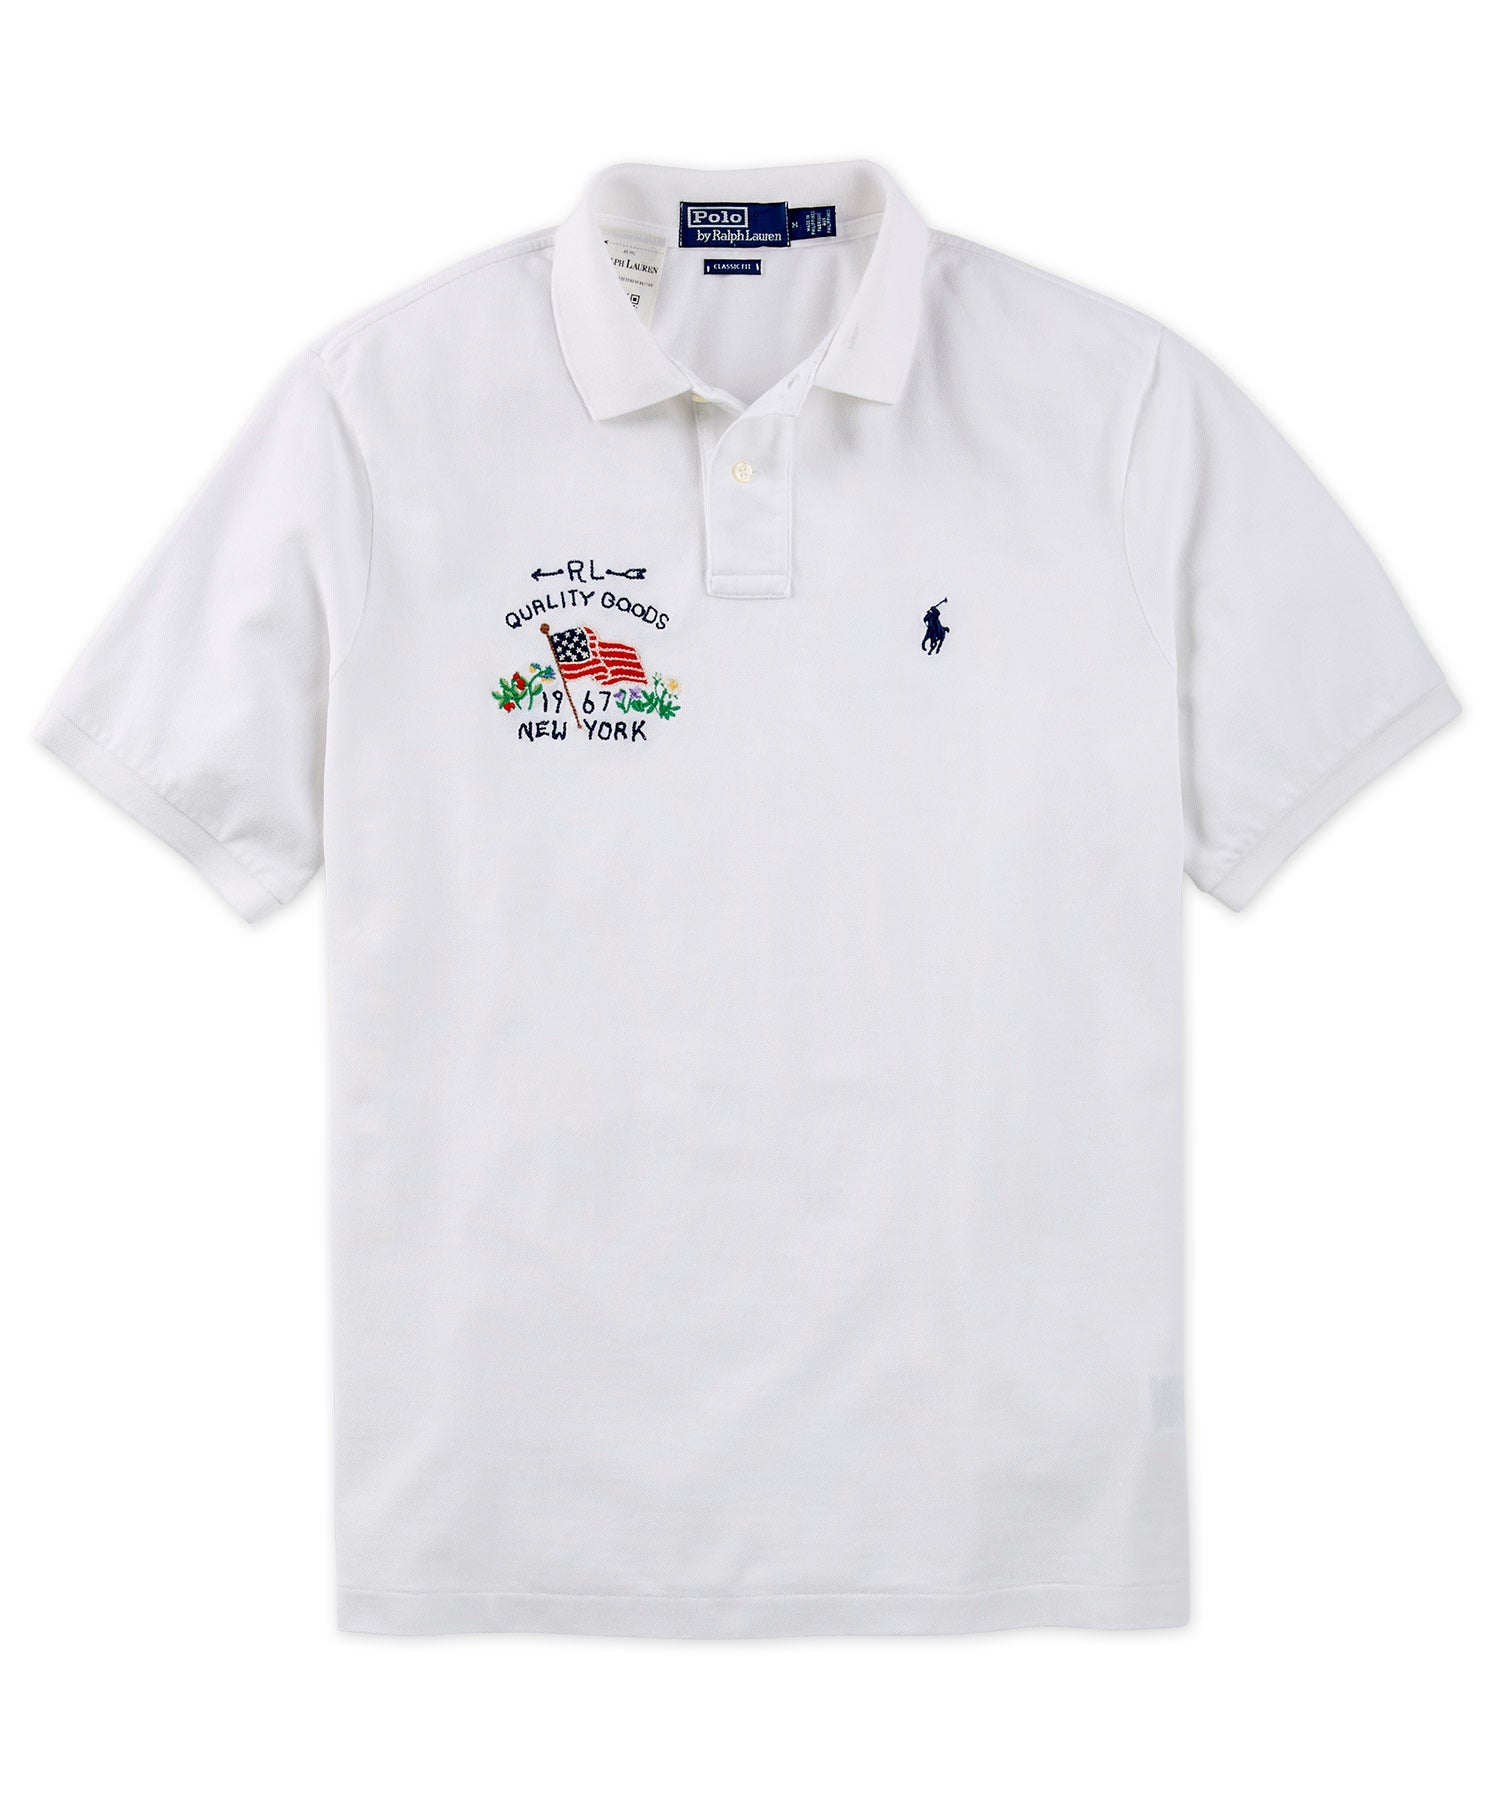 Polo Ralph Lauren Short Sleeve Country Store Polo Shirt - Westport